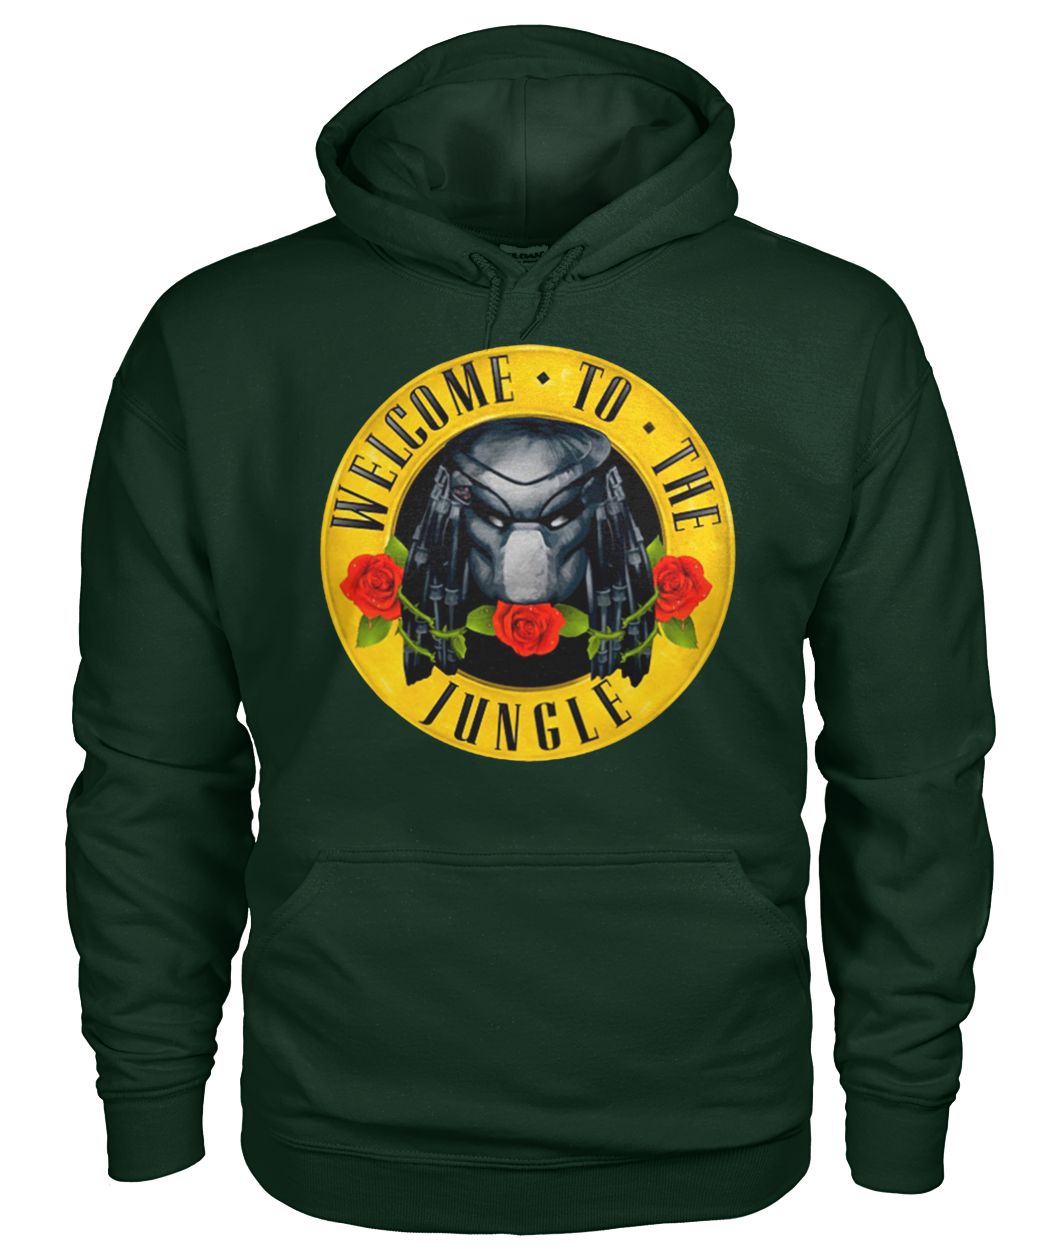 Welcome to the jungle predator gildan hoodie